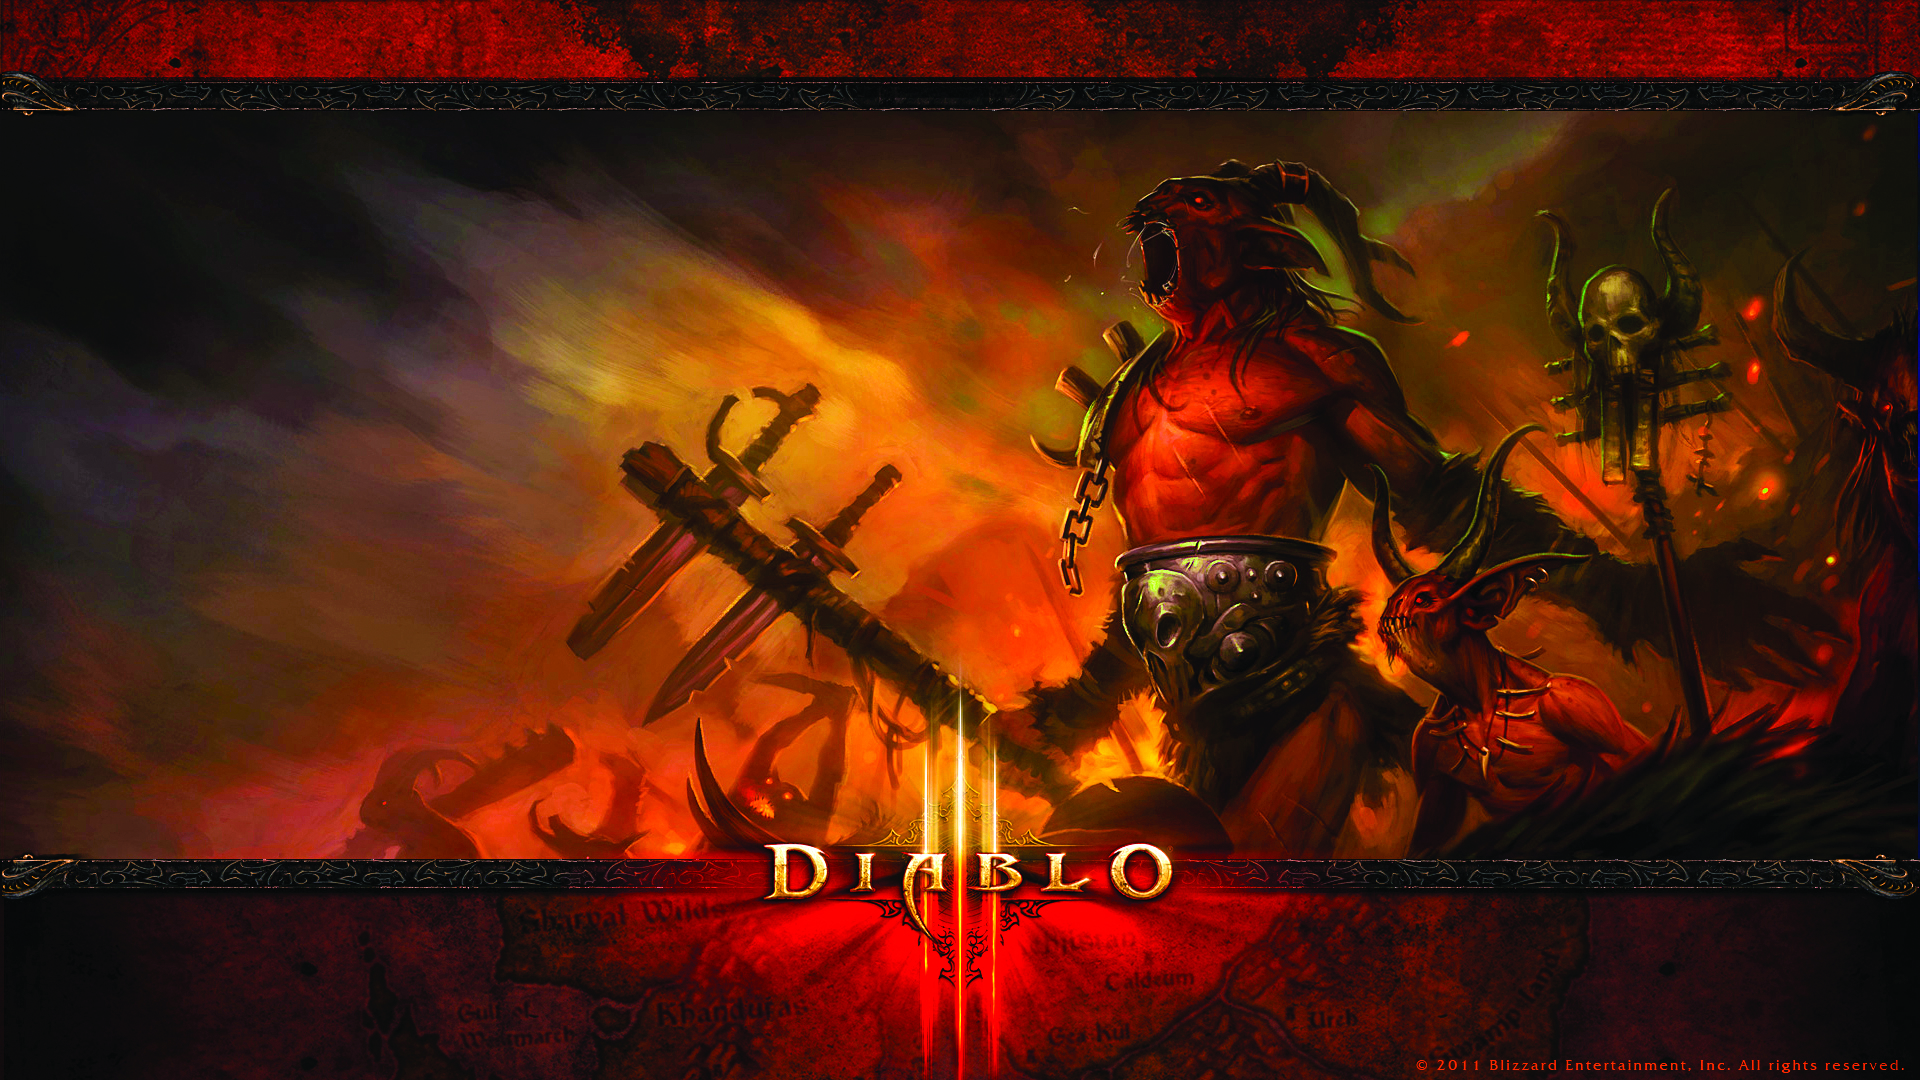 Oman Weekend Download: Diablo III's dark, gritty game play is brilliant